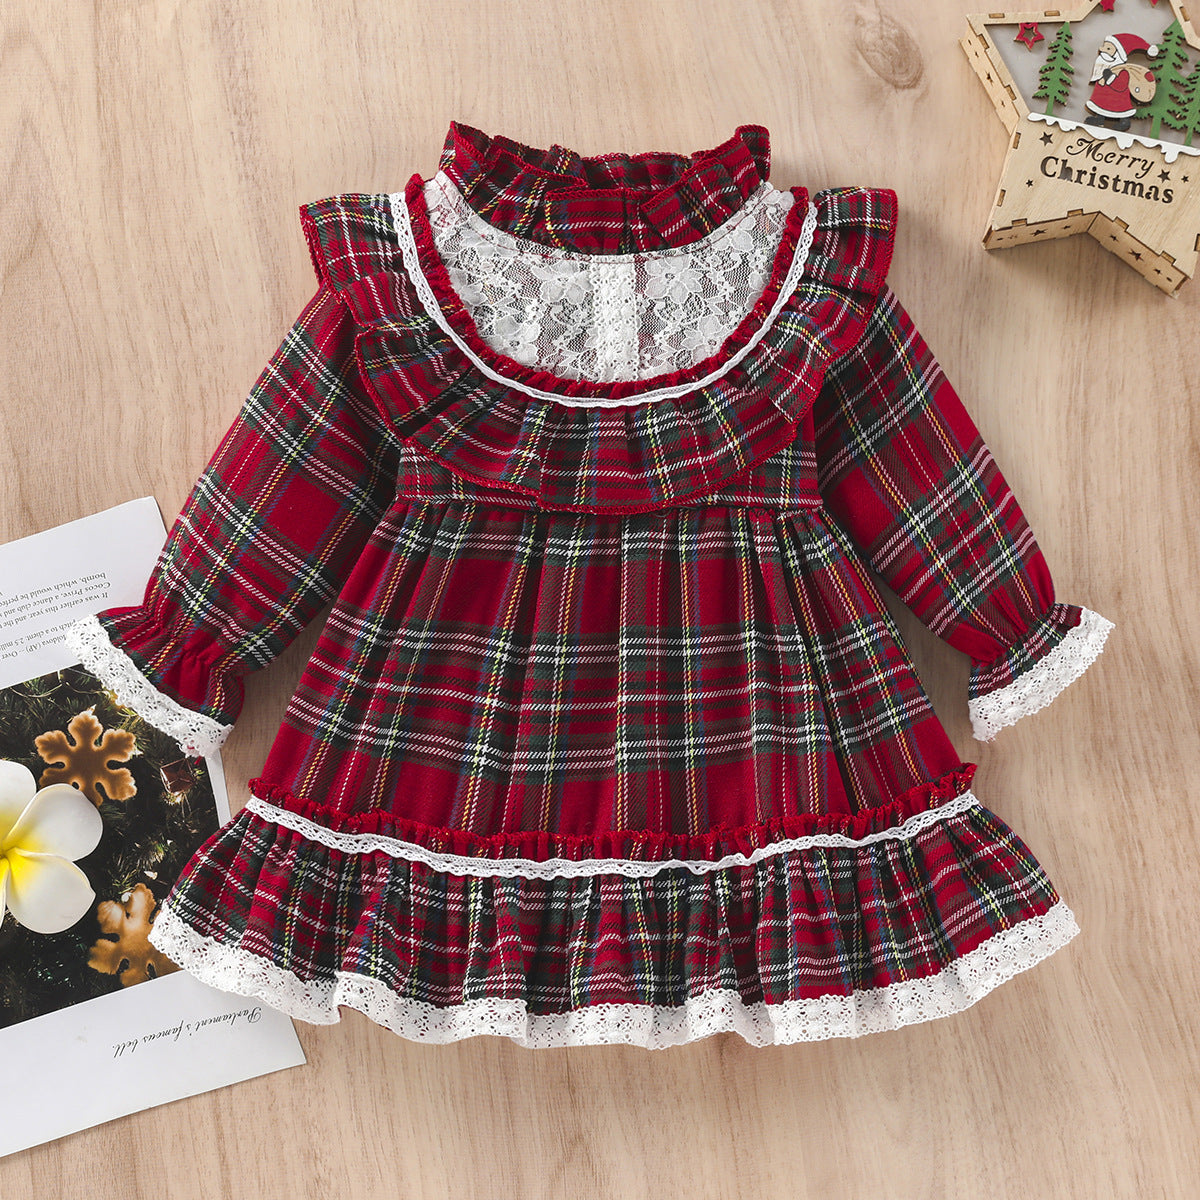 Toddler Christmas Plaid Dress.